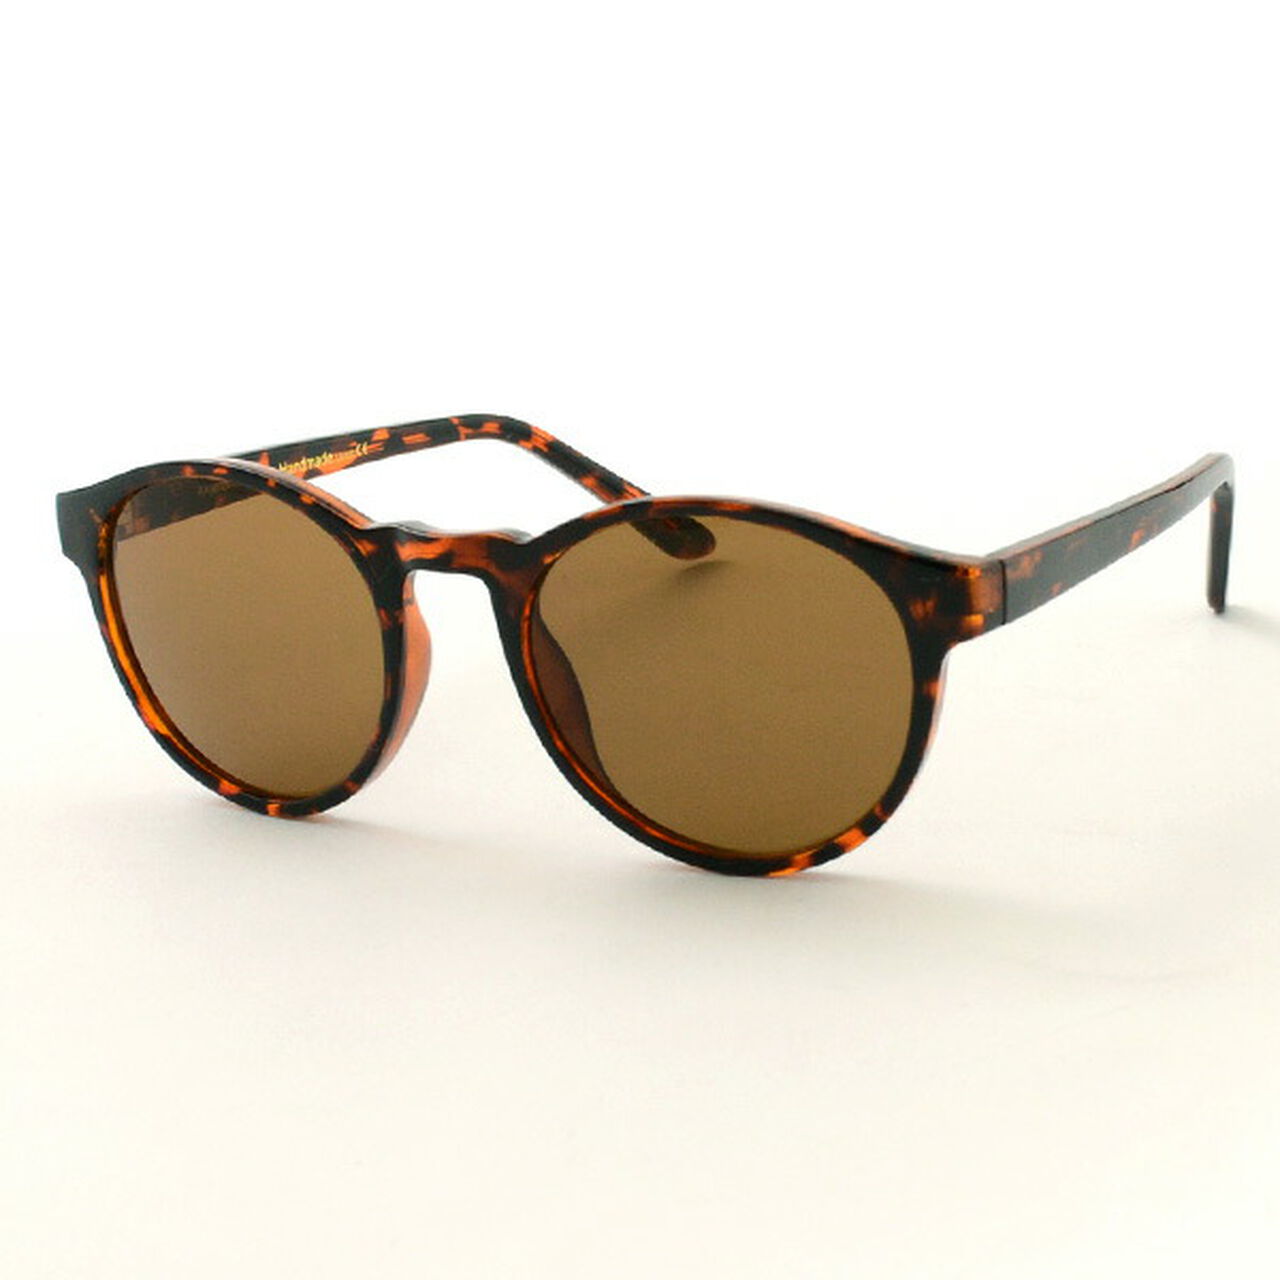 Marvin Cell Frame Sunglasses,DemiTortoise, large image number 0